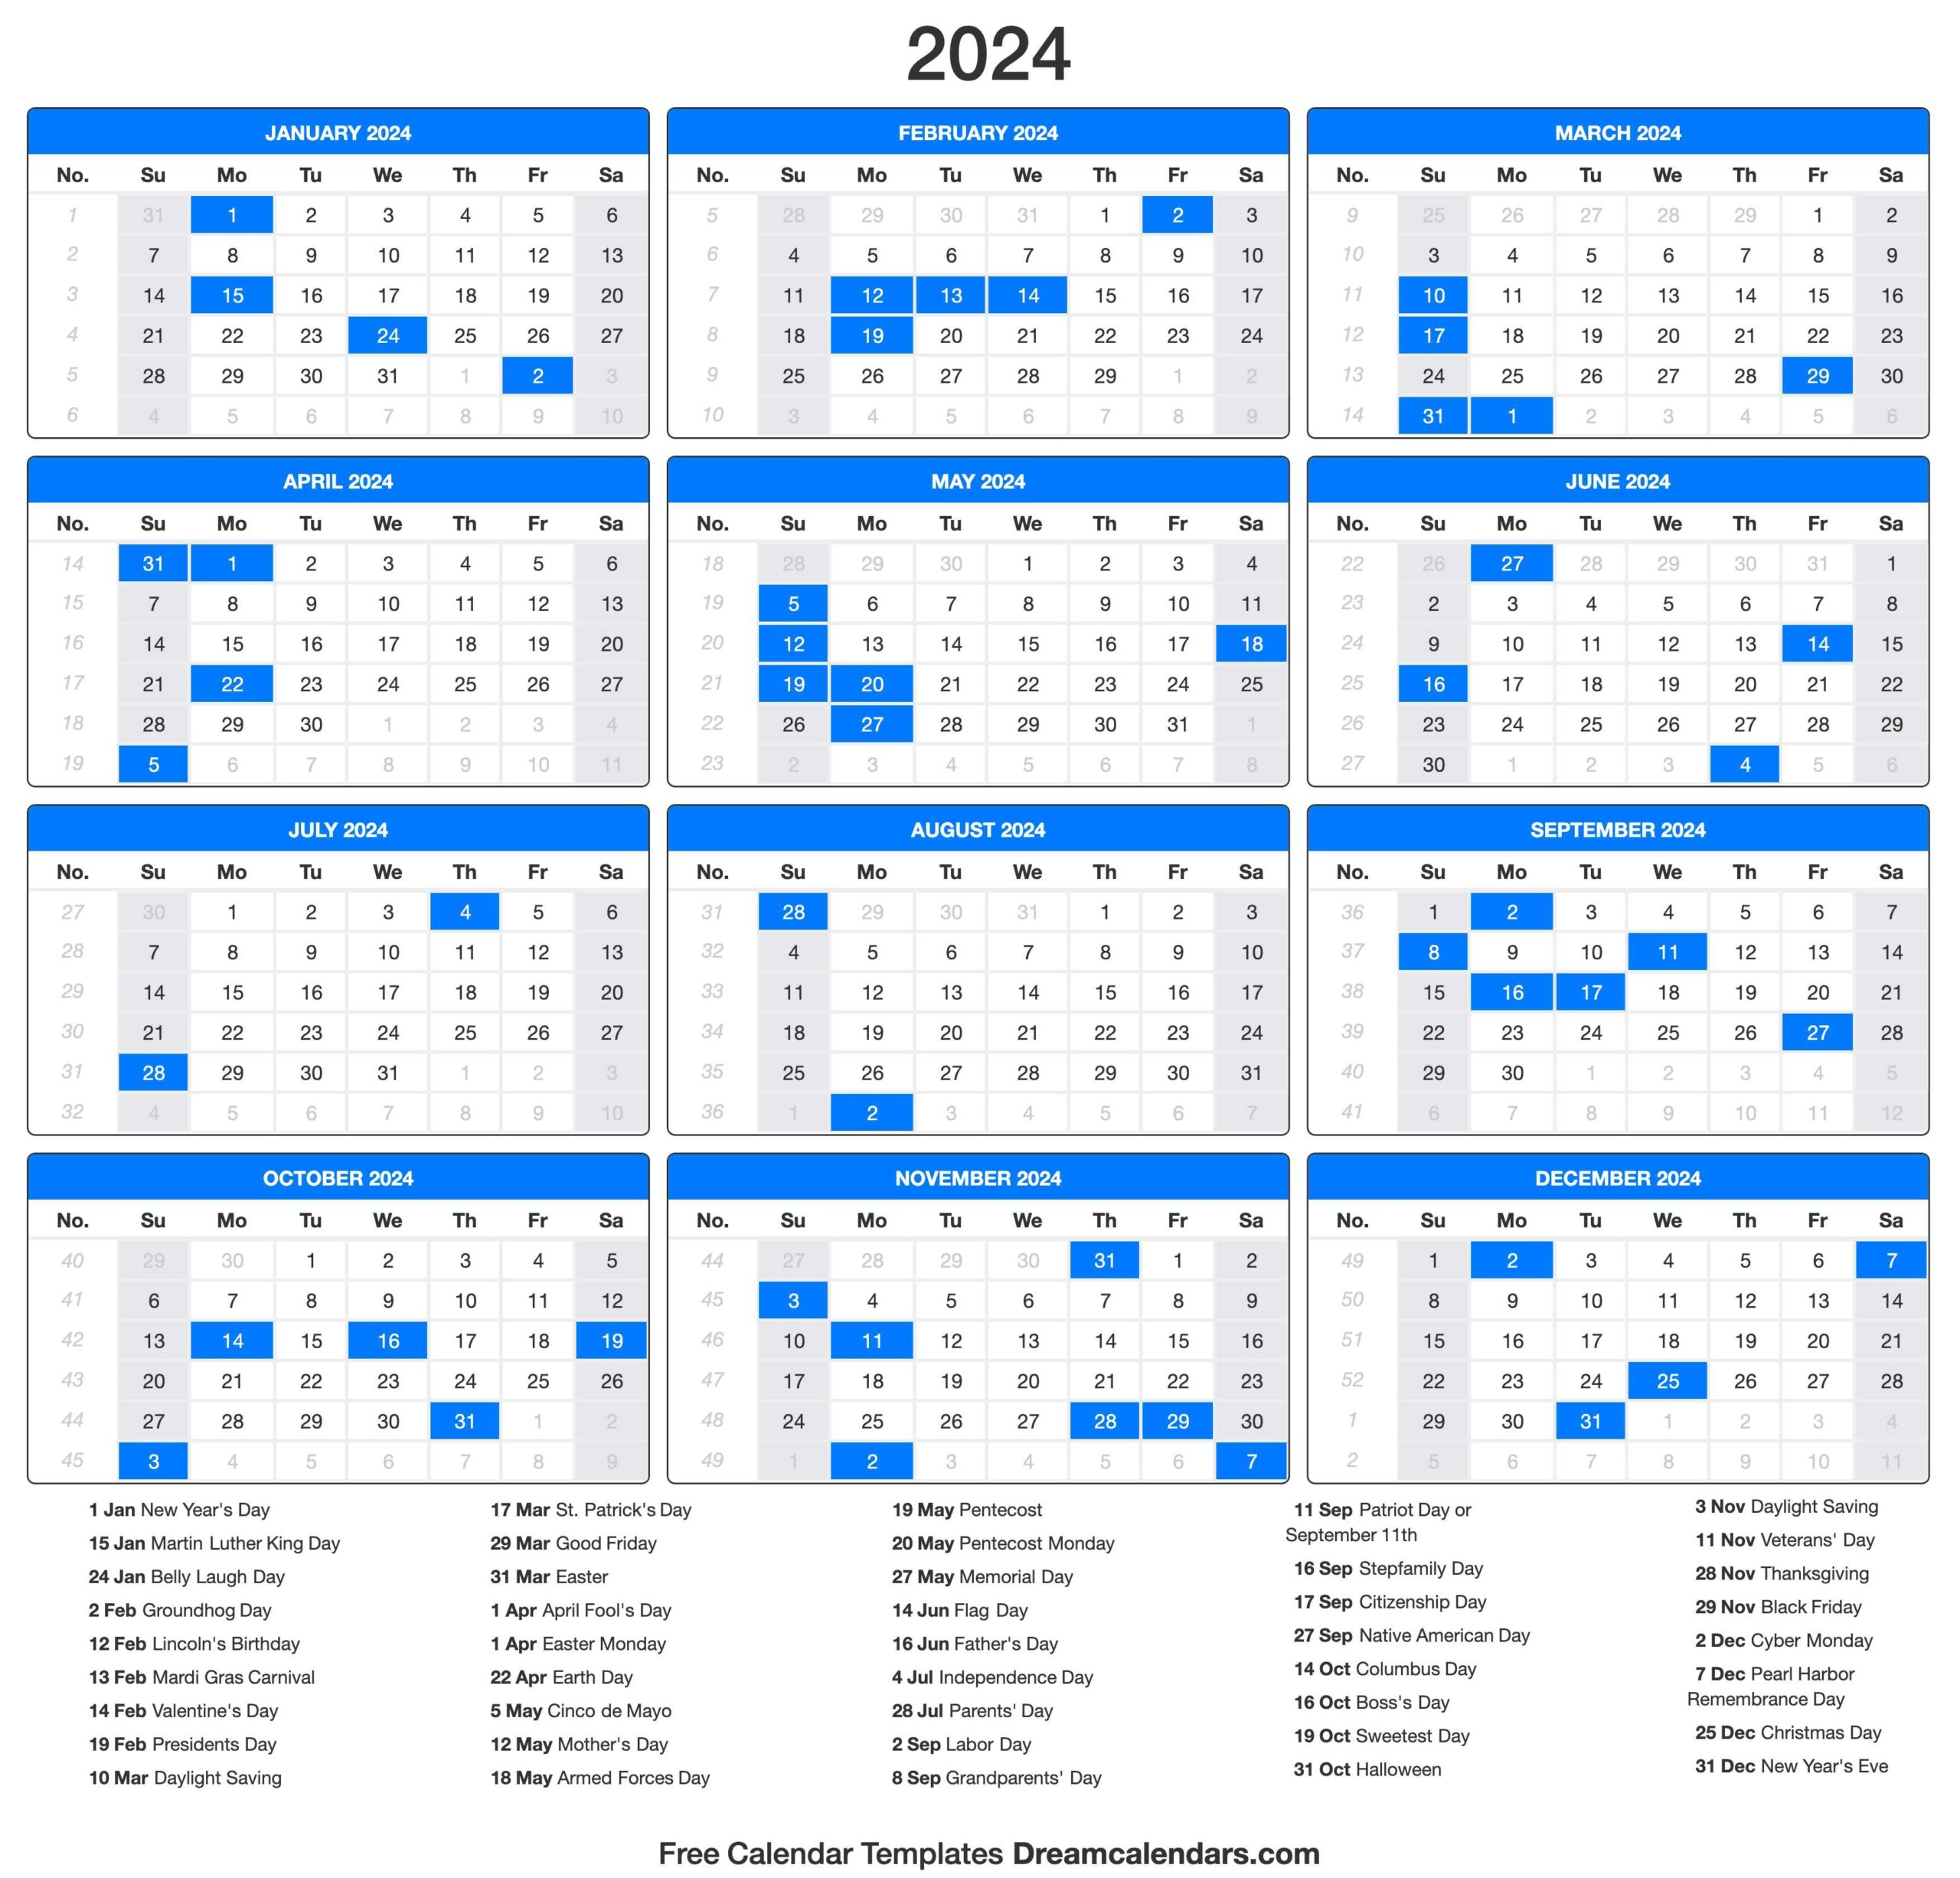 2024 Calendar - Free Printable 2024 Yearly Work Calendar Template